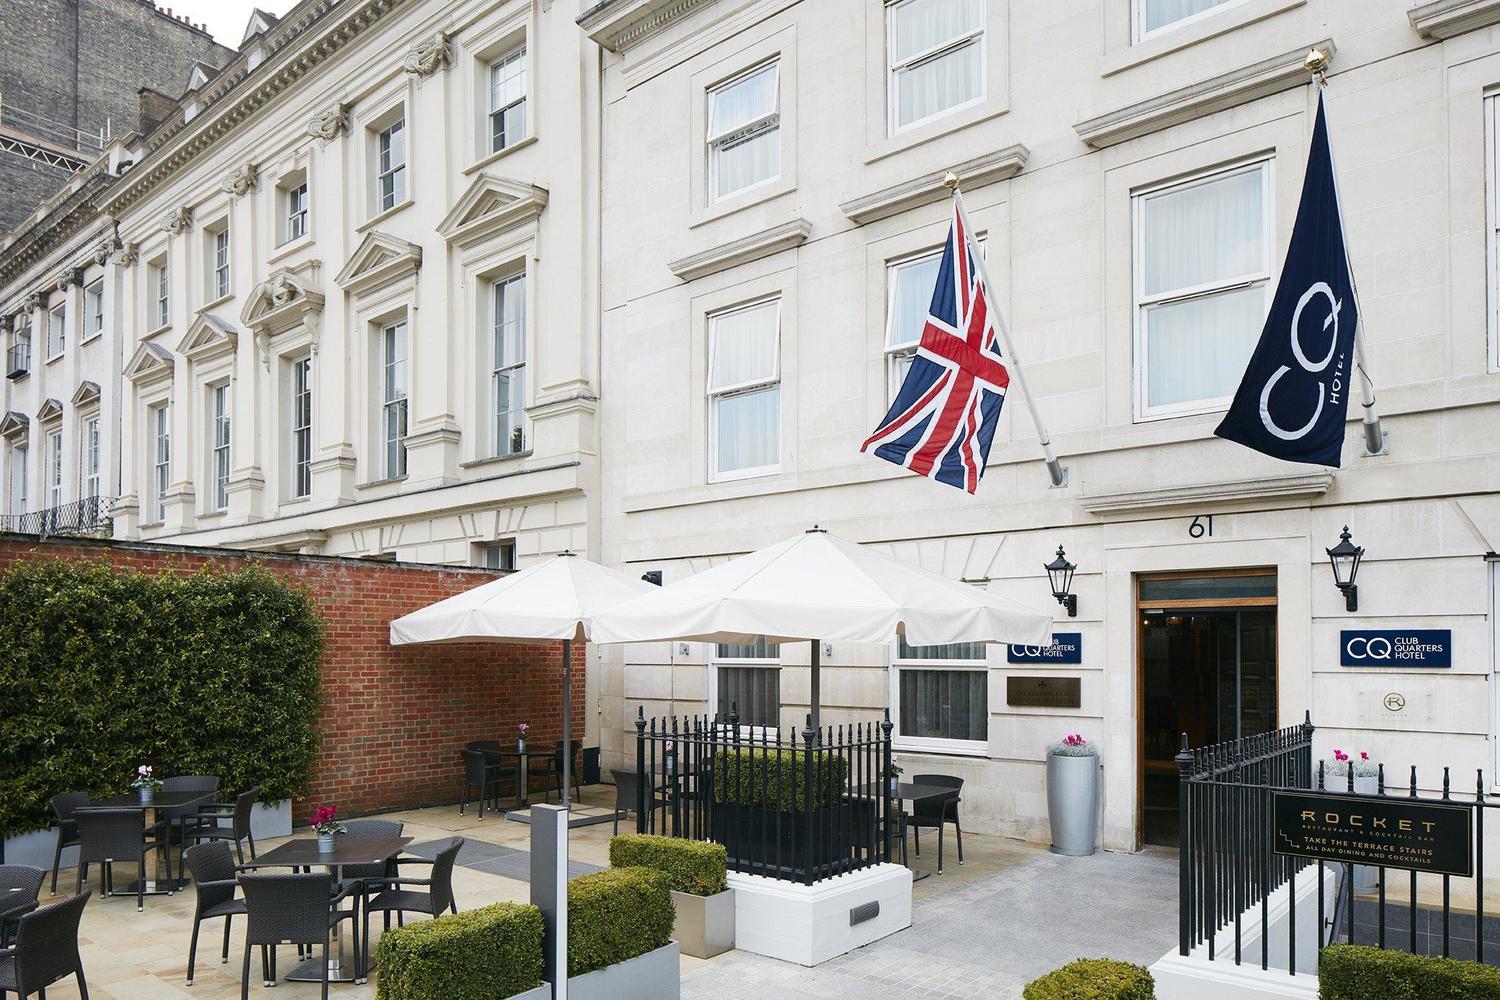 Club Quarters Hotel, Lincoln's Inn Fields, London, United Kingdom Jobs ...